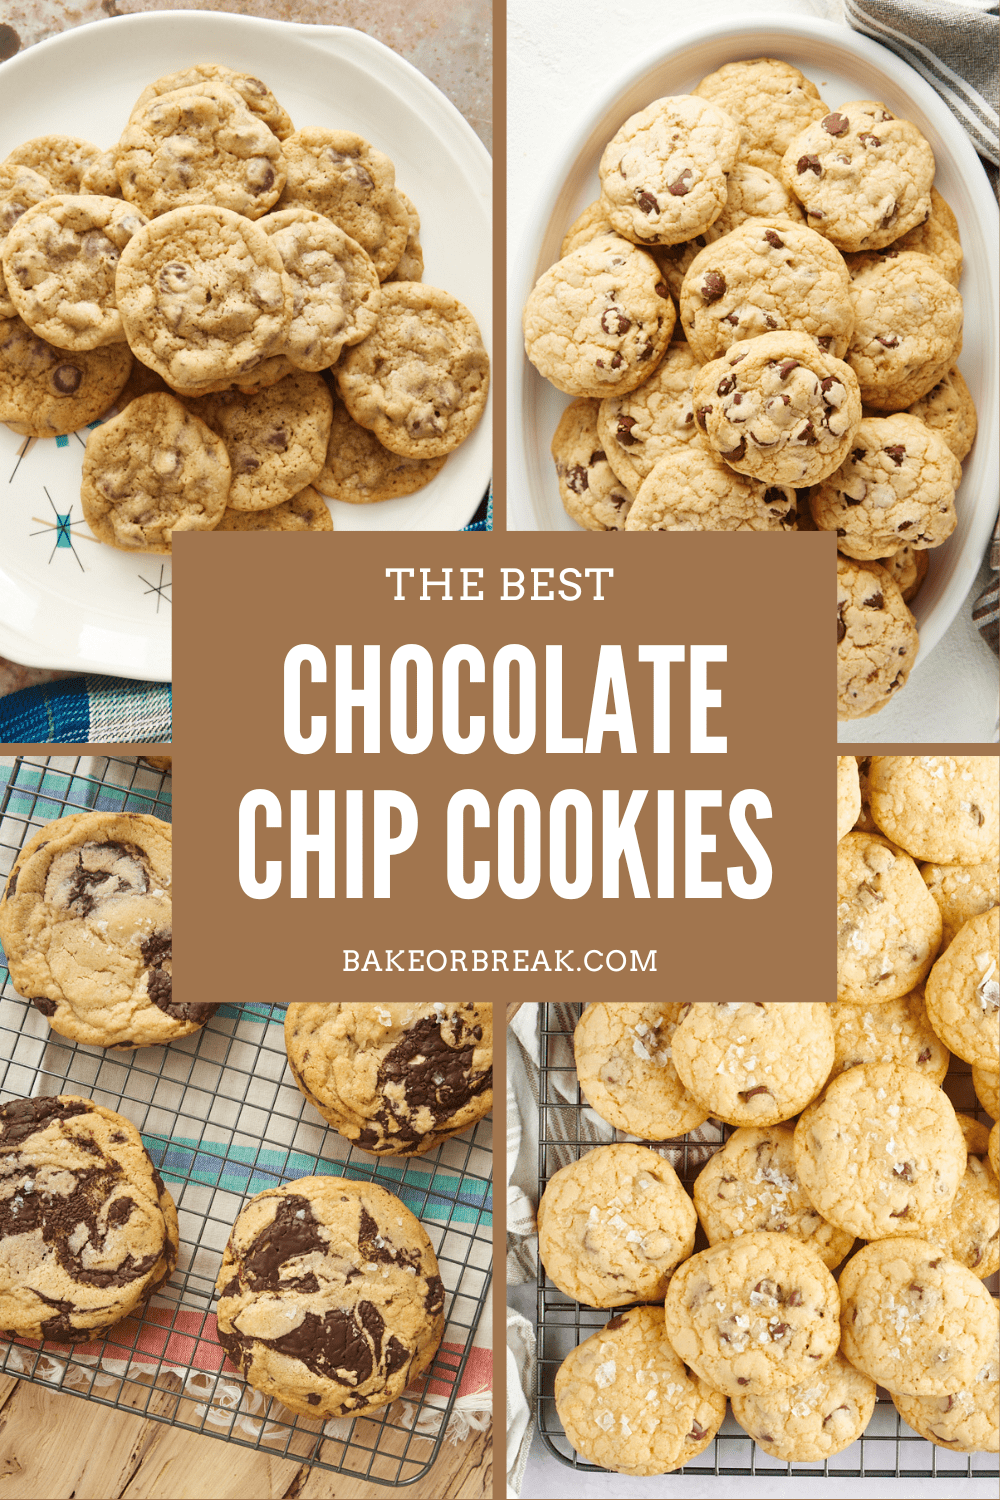 The Best Chocolate Chip Cookies bakeorbreak.com